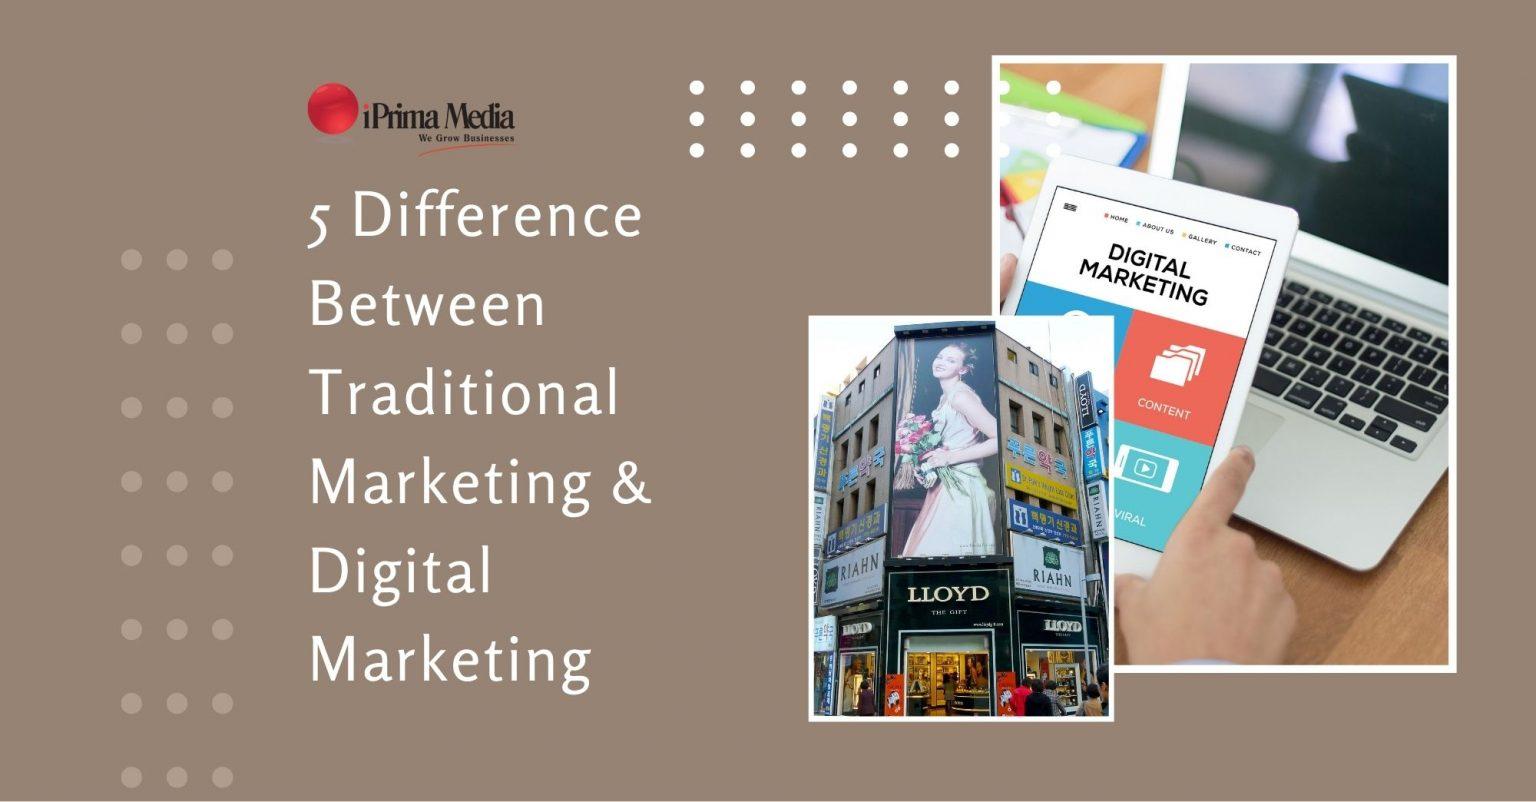 Traditional Marketing & Digital Marketing